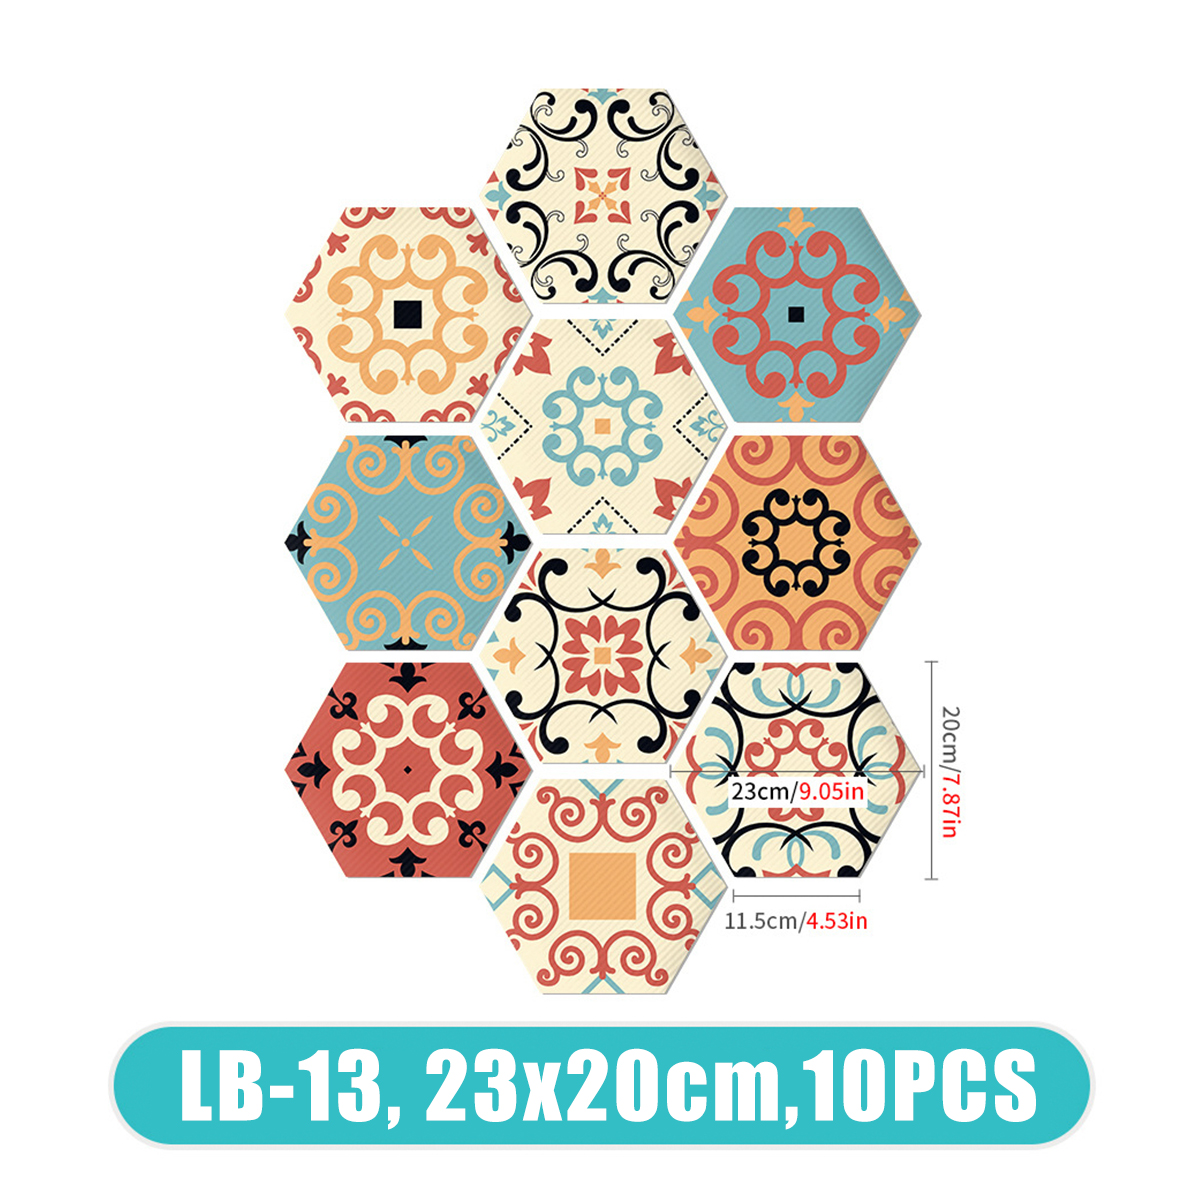 Hexagonal-Floor-Stickers-Special-Shaped-Tile-Stickers-Self-Adhesive-Bathroom-Toilet-Waterproof-And-W-1859007-13